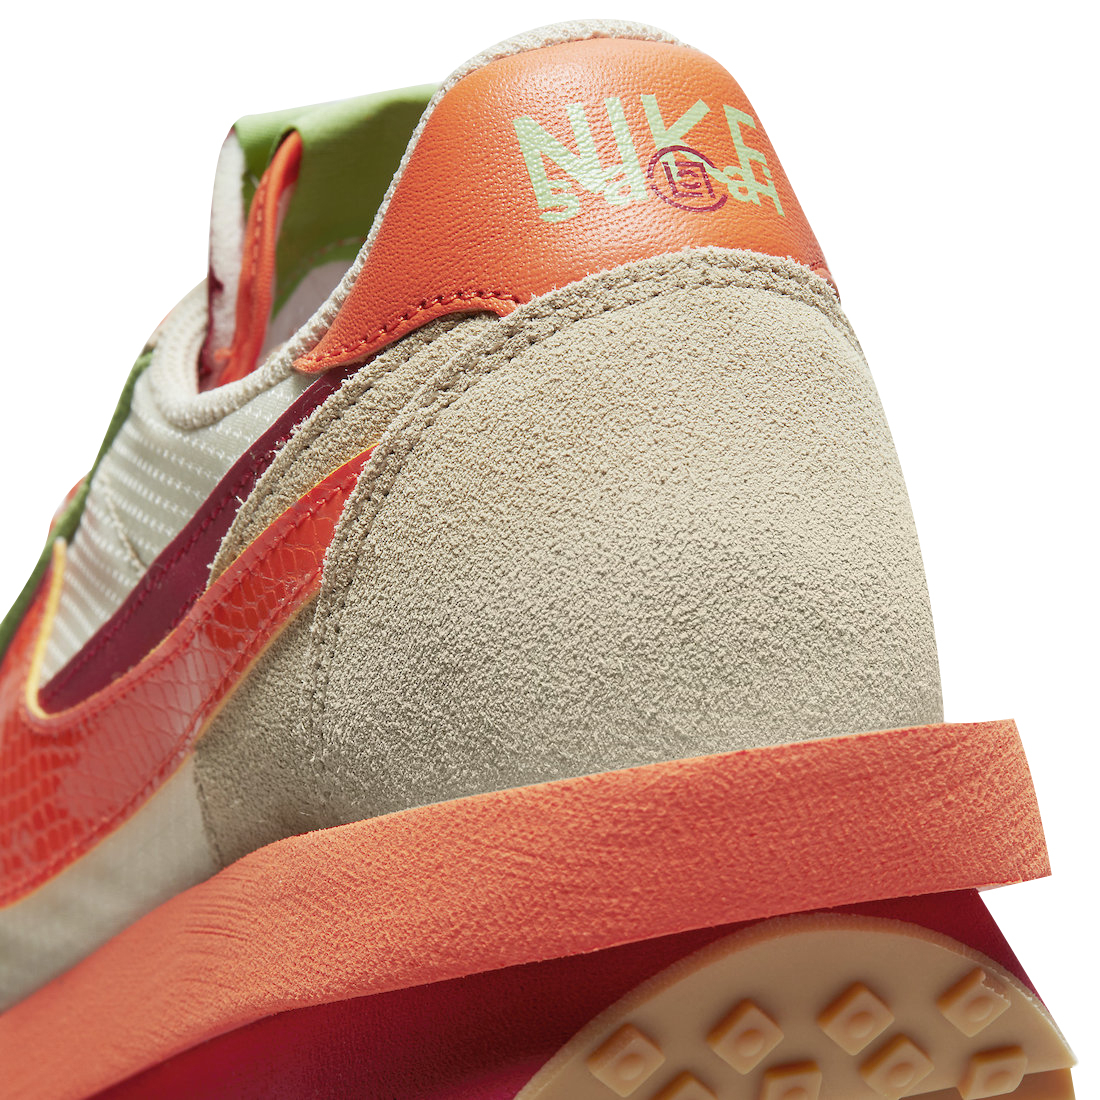 Clot x Sacai x Nike LDWaffle Orange Blaze DH1347-100 - KicksOnFire.com